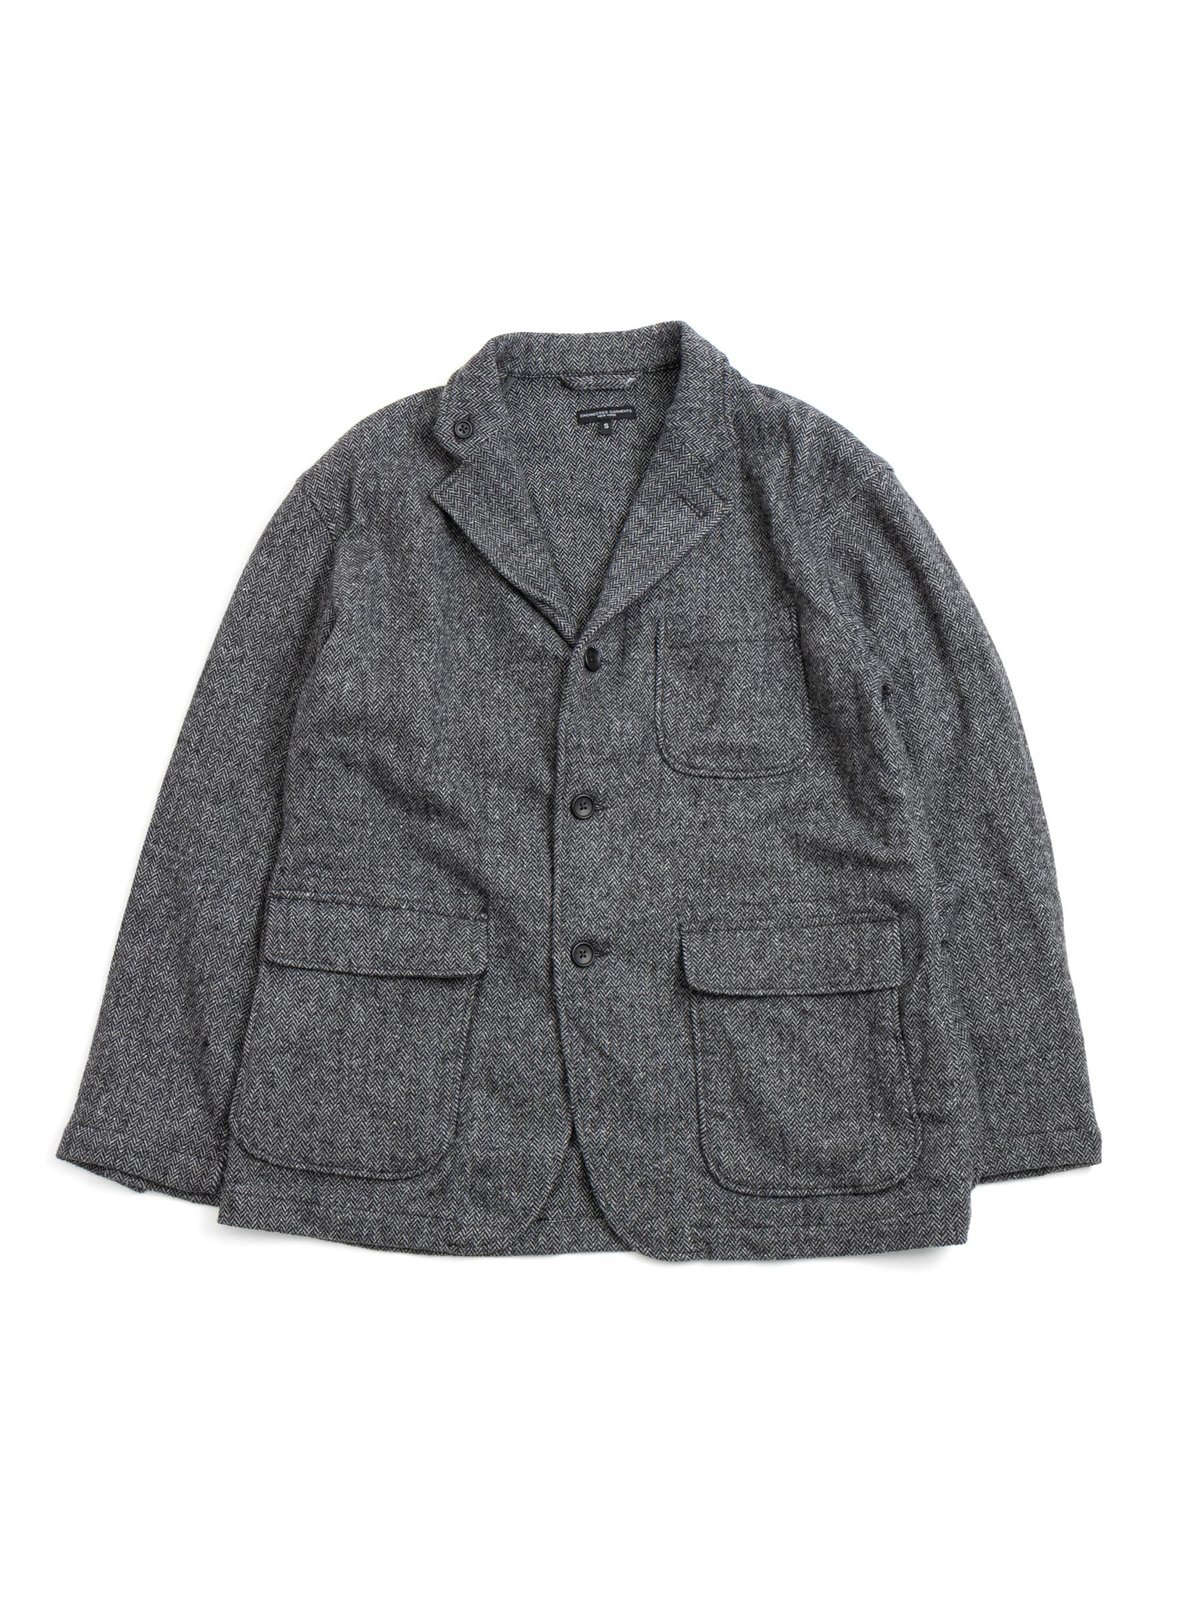 engineered garments daiki suzuki loiter jacket poly wool FW22